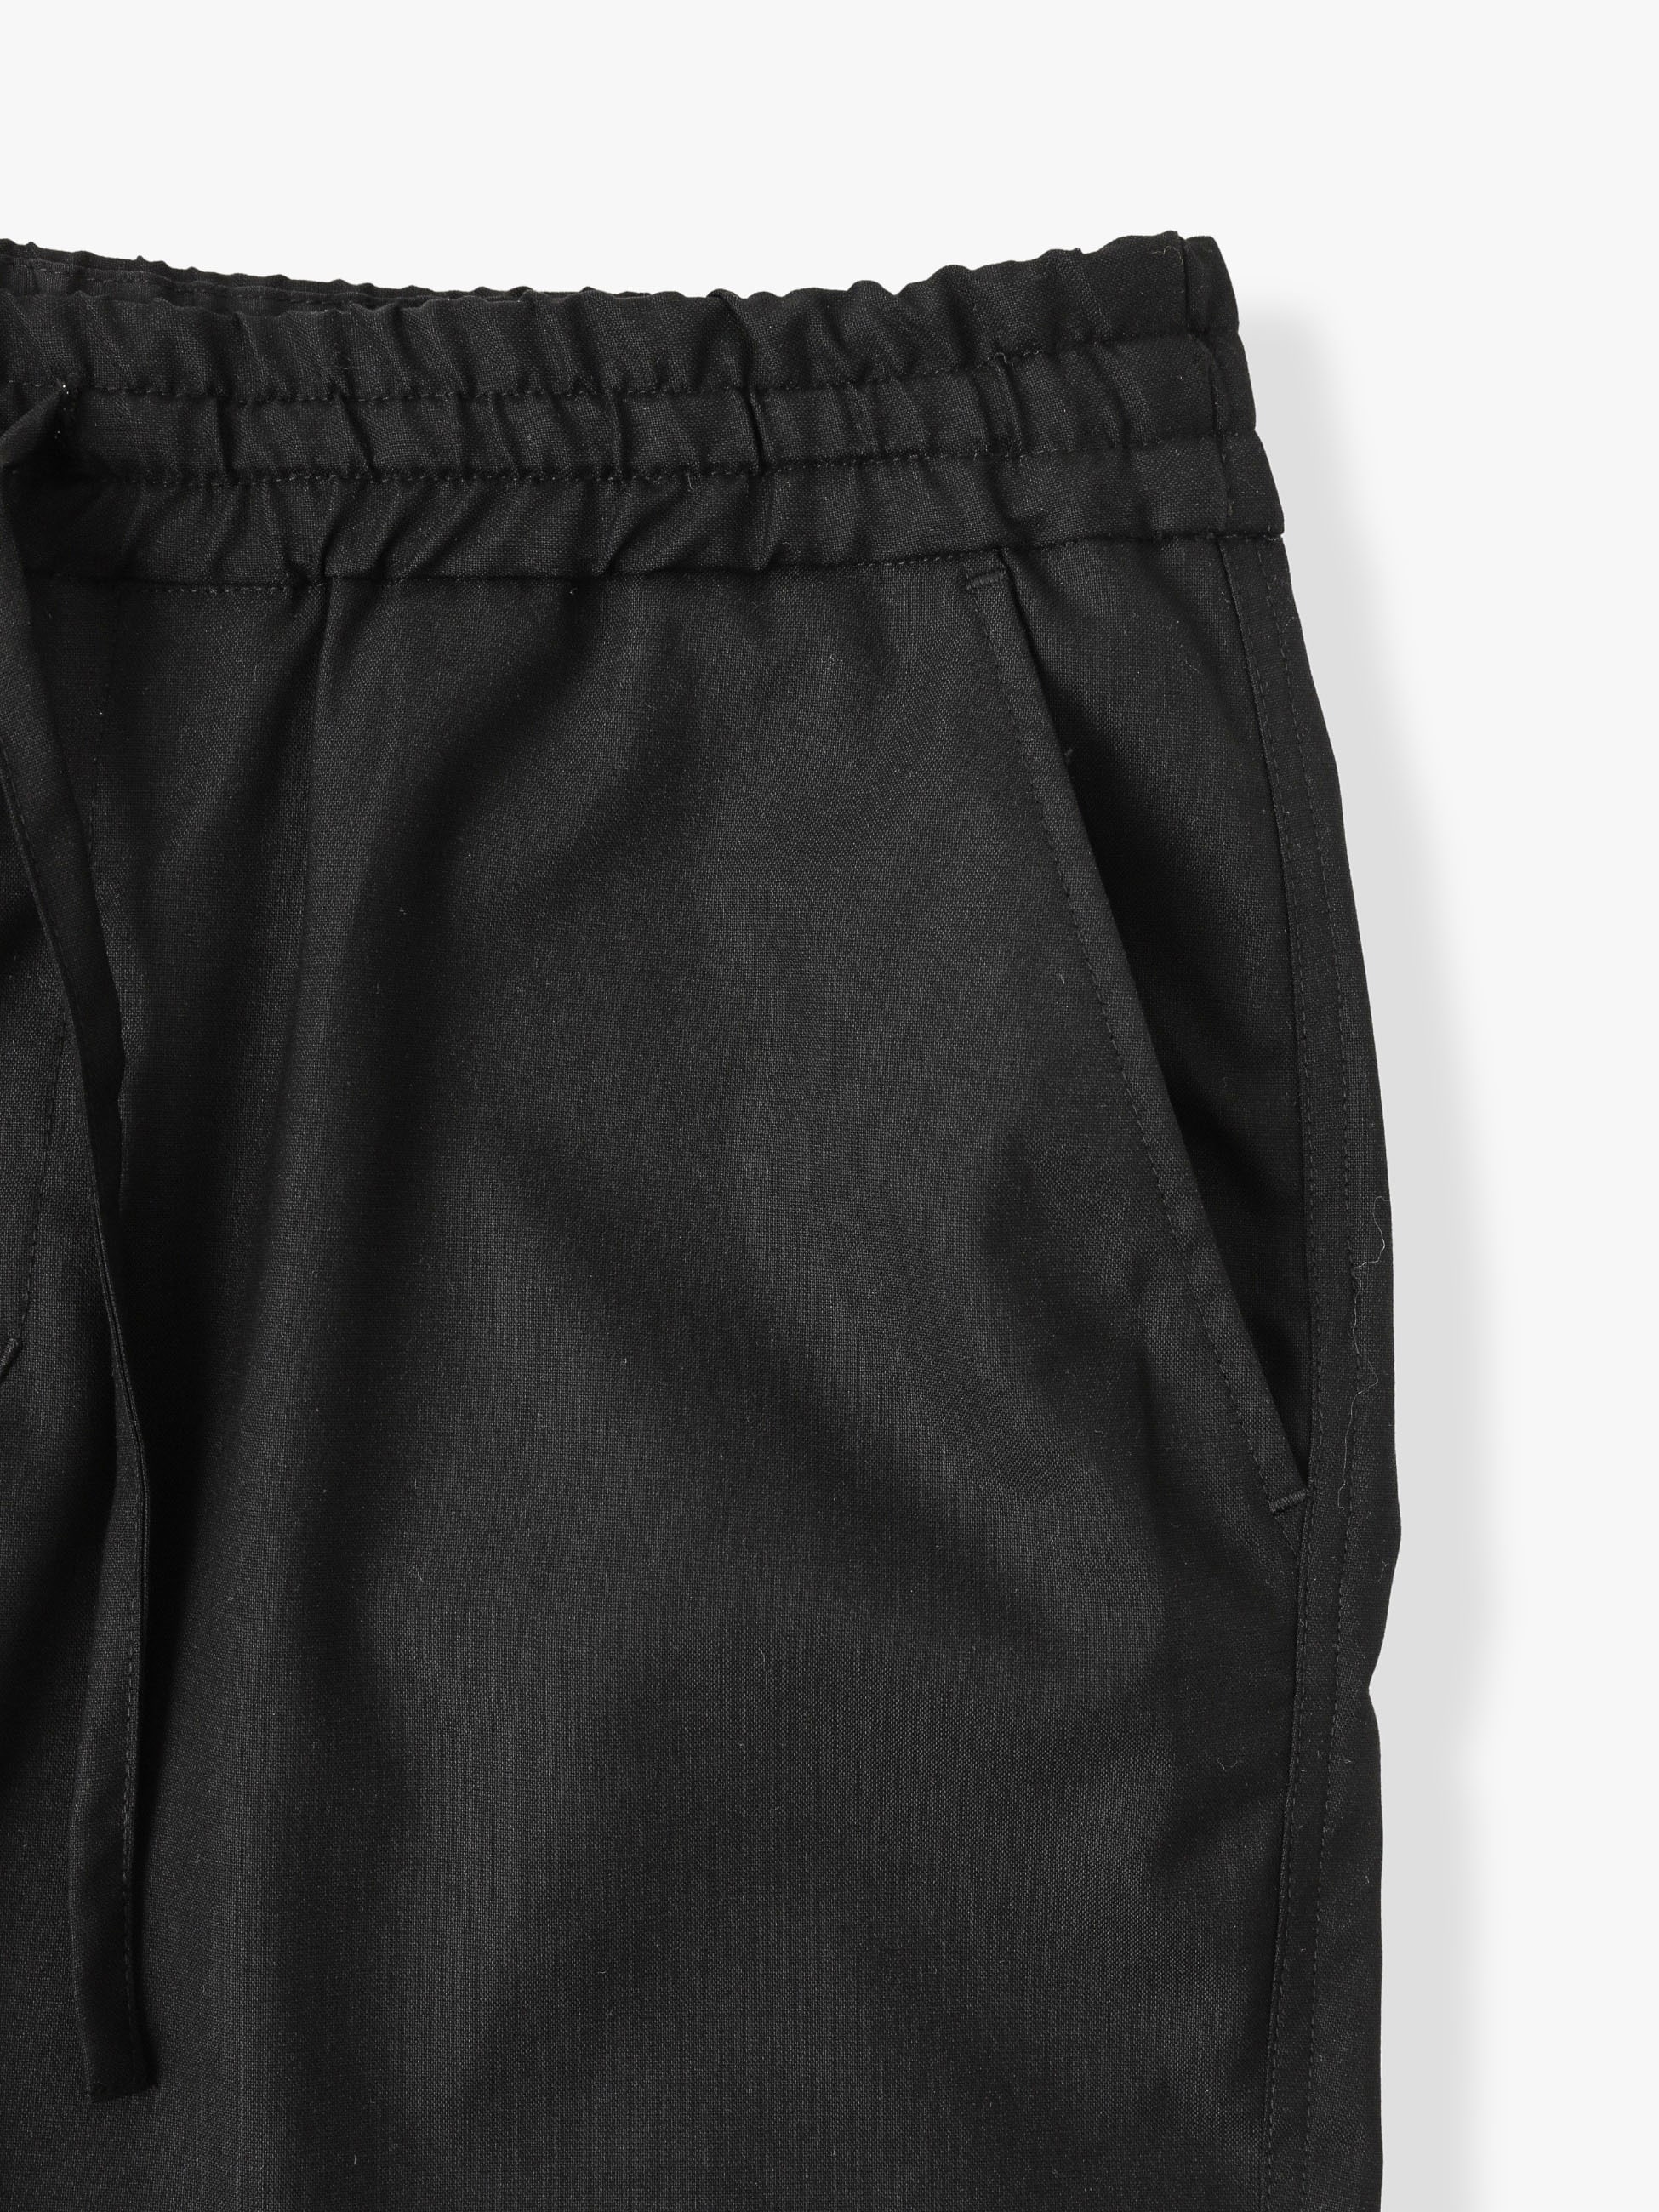 Belted Stretch Flare Pants - Black